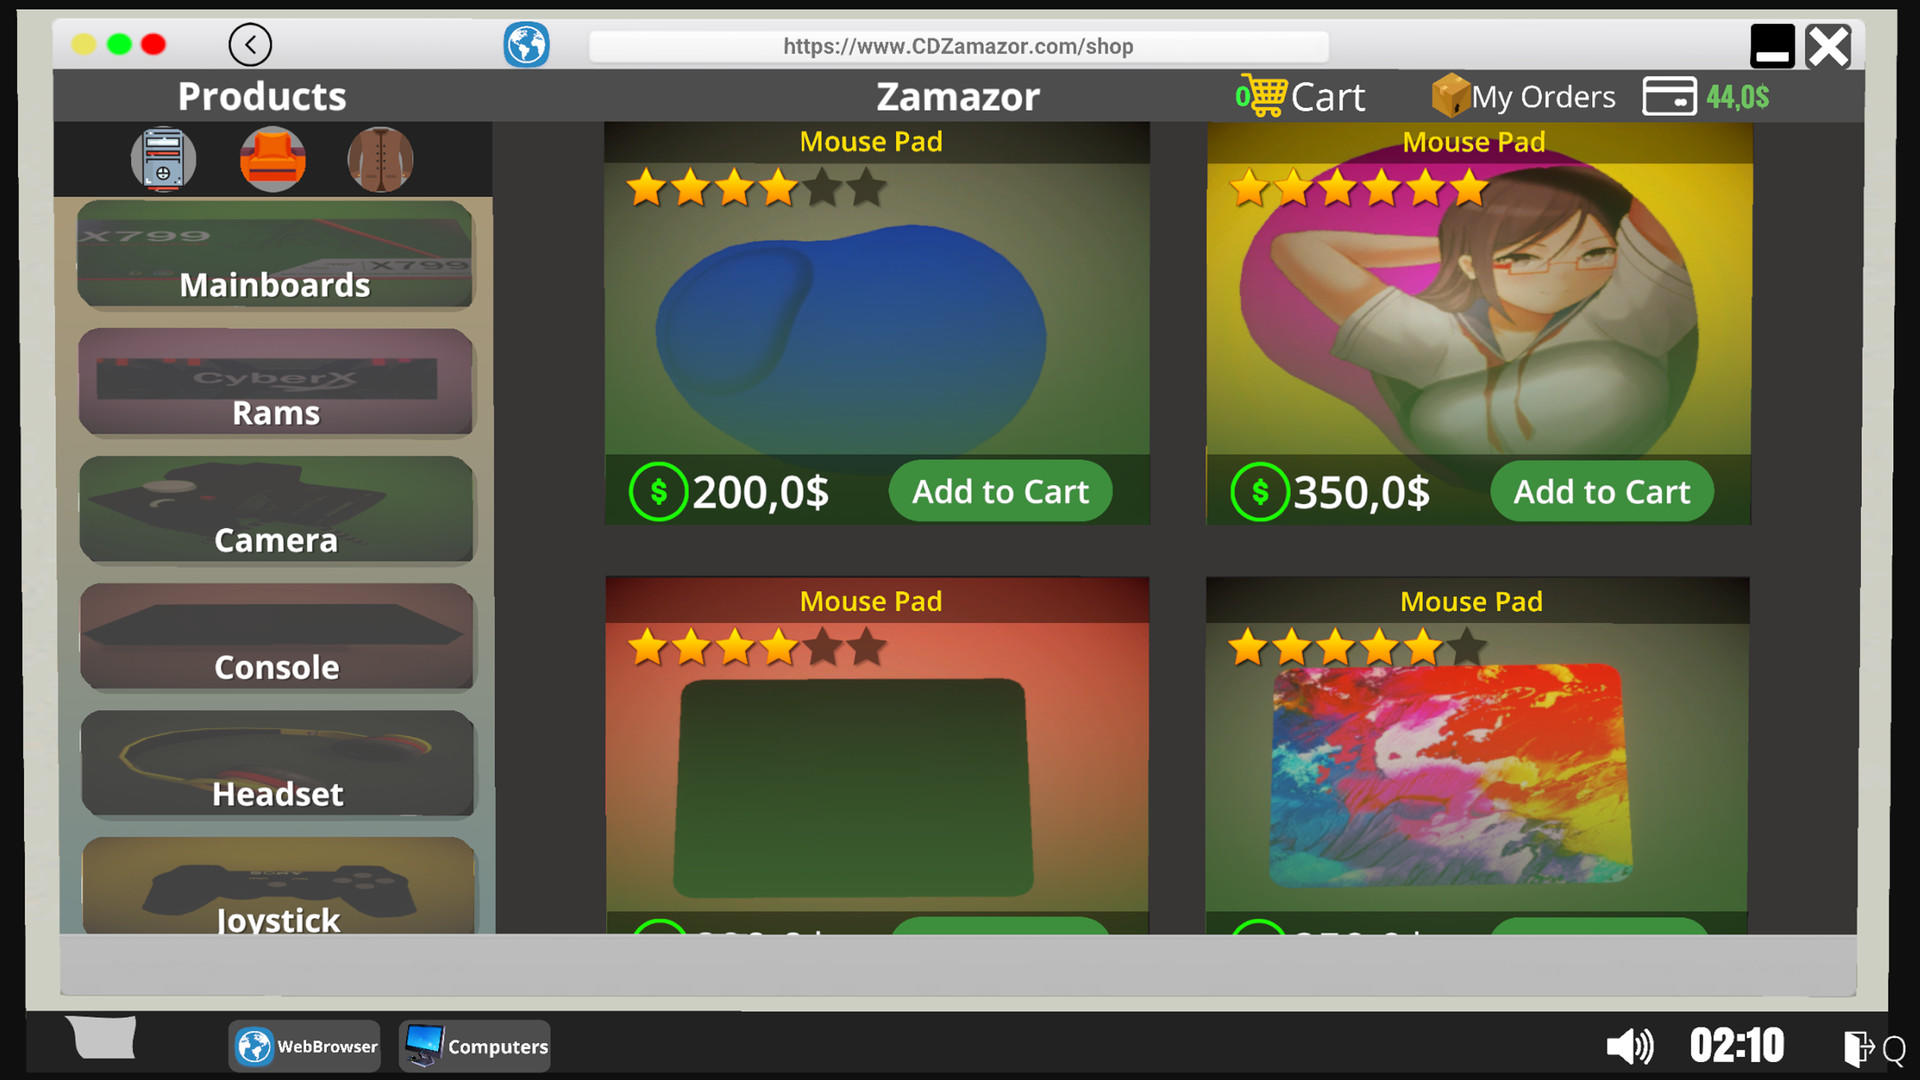 Screenshot of Streamer Life Simulator